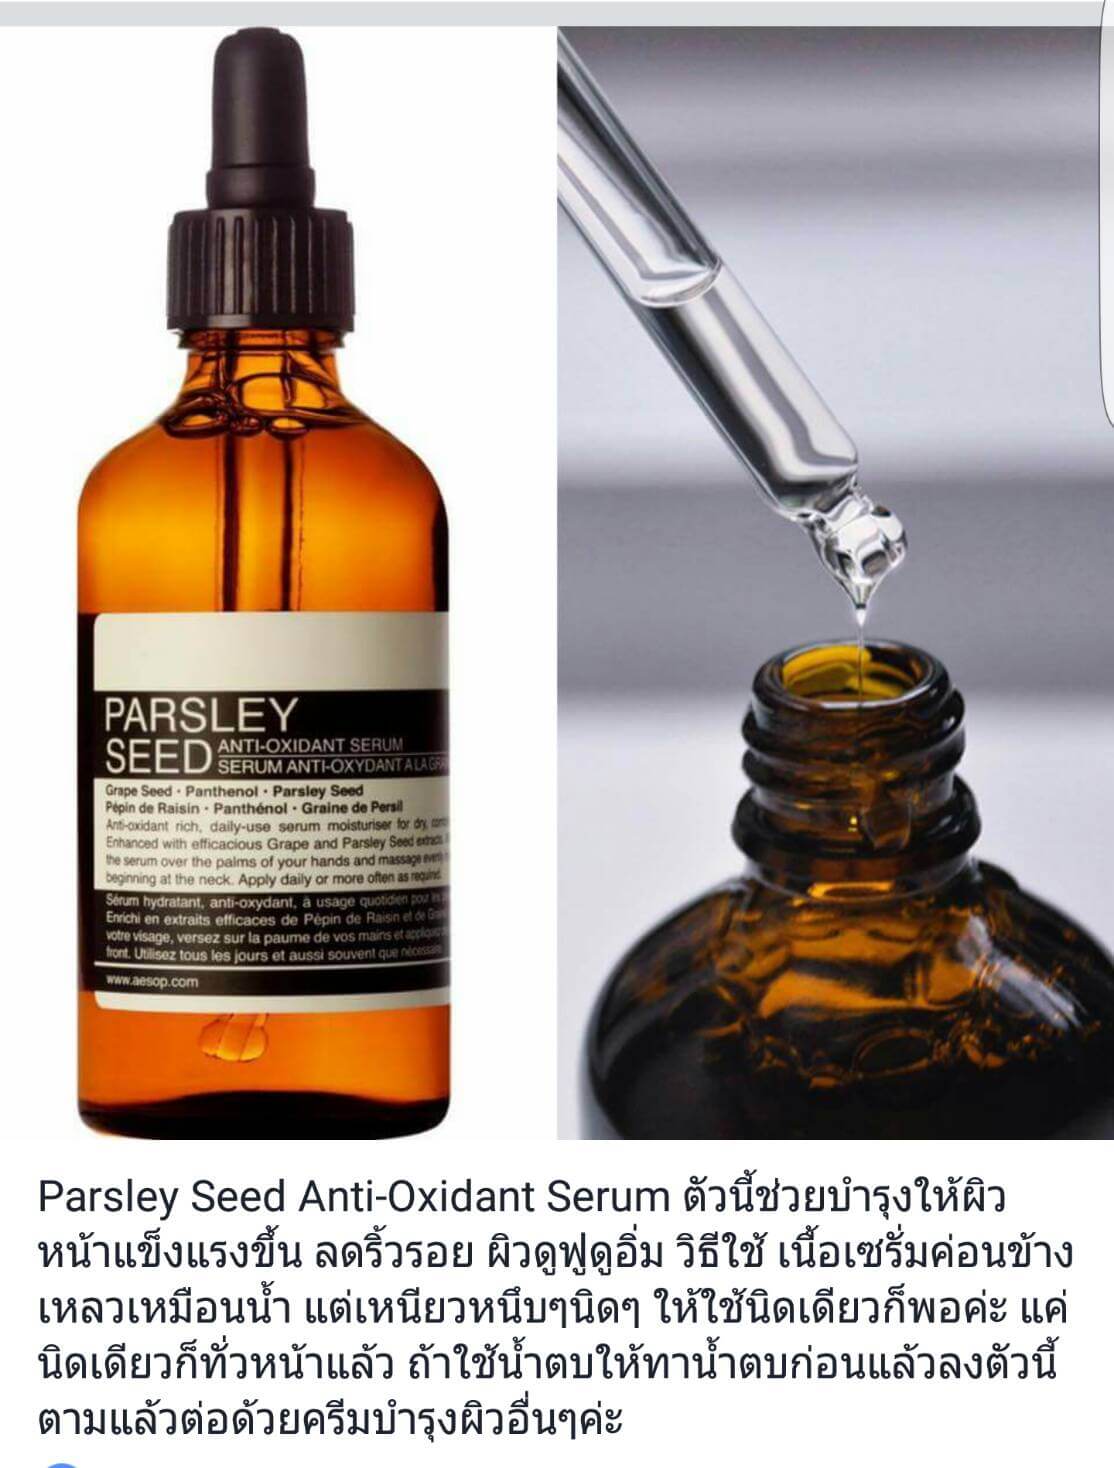 aesop, aesop รีวิว,Parsley Seed Anti-Oxidant Serum 15 ml , aesop ราคา, aesop parsley seed anti-oxidant serum รีวิว, aesop parsley seed anti-oxidant serum, aesop ตัวไหนดี, aesop กระชับรูขุมขน, aesop ขาย, aesop ขายที่ไหน, ซื้อ aesop online, aesop ดีไหม, aesop ในไทย, 